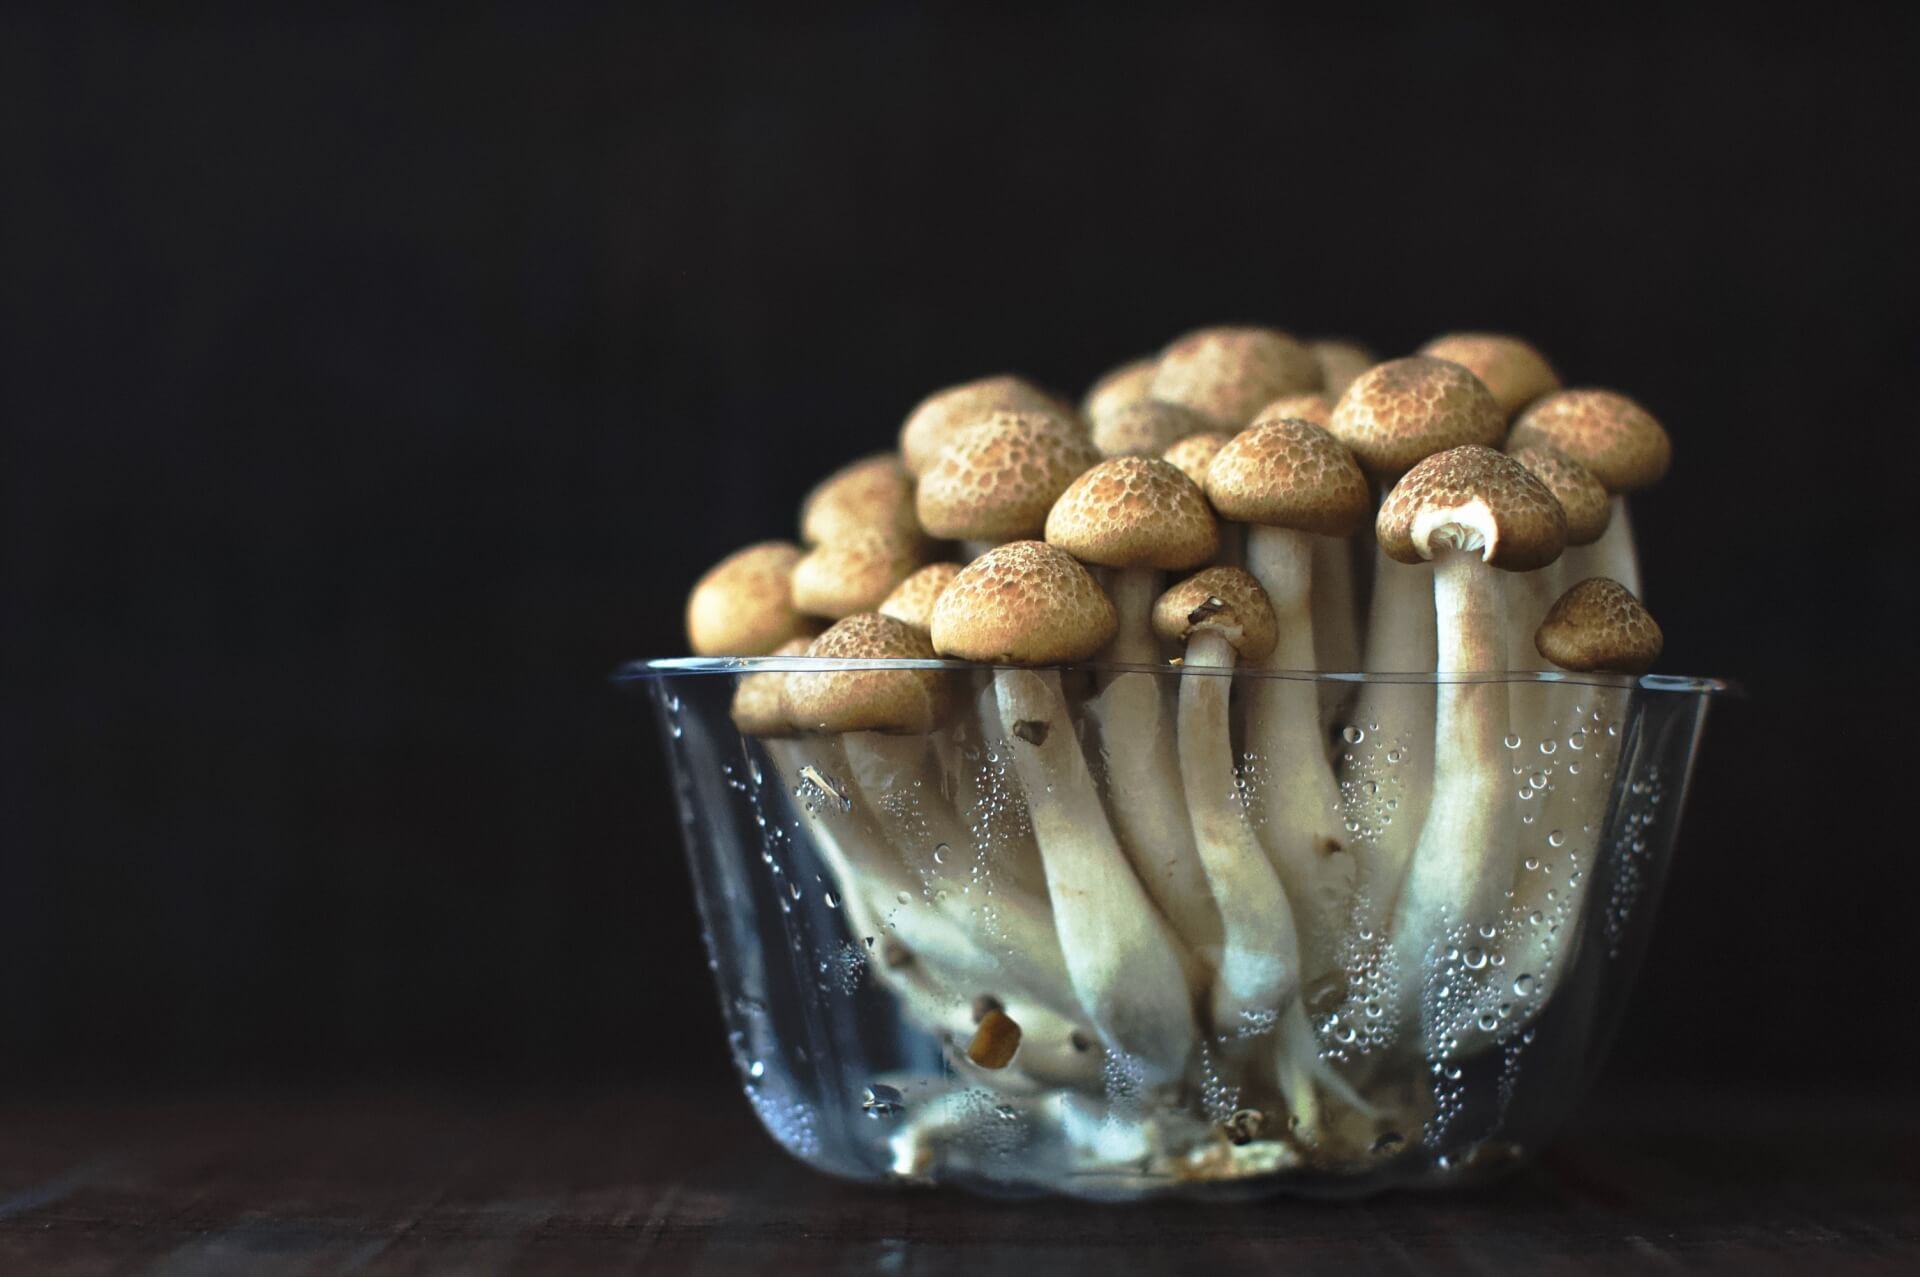 mushrooms magic freeze mushroom psilocybin grow know shrooms own guide expensive prostate cancer need